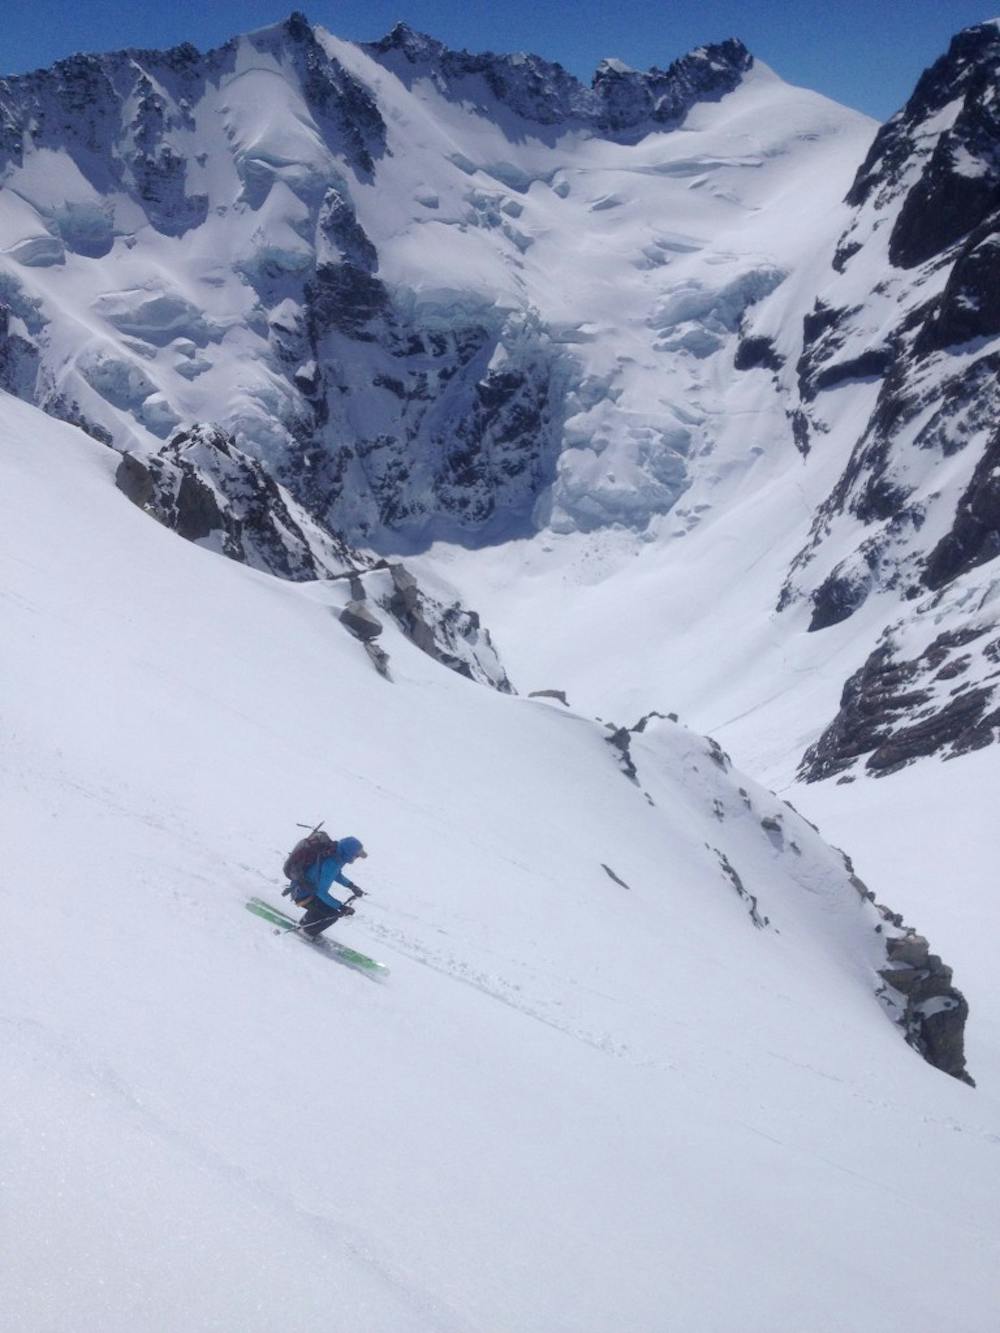 Skiing down the Bonney Glacier